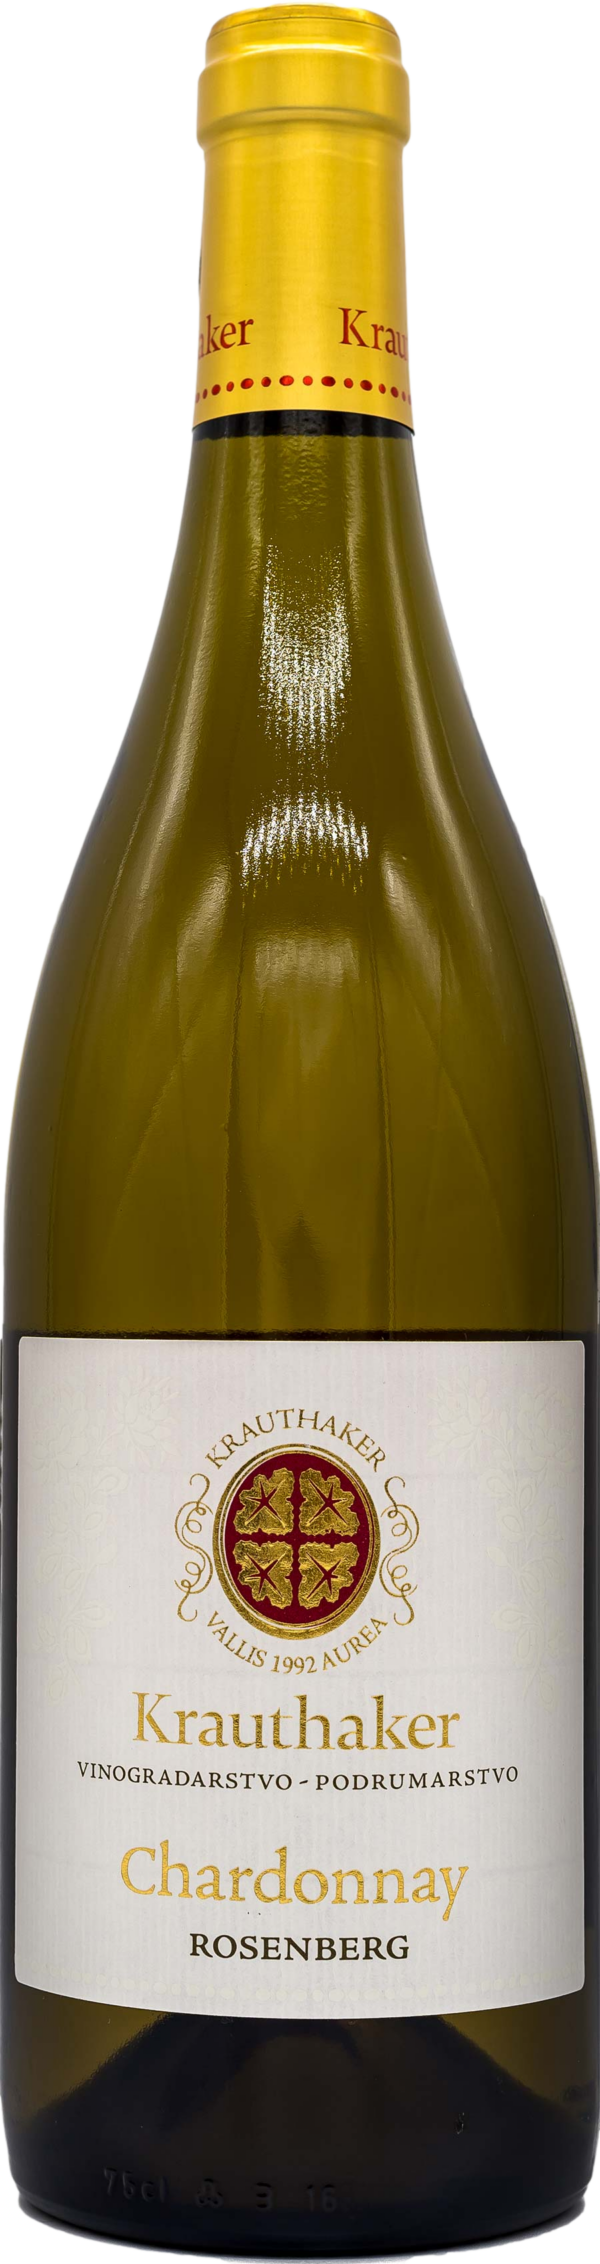 Product image of Krauthaker Chardonnay Rosenberg 2021 from 8wines